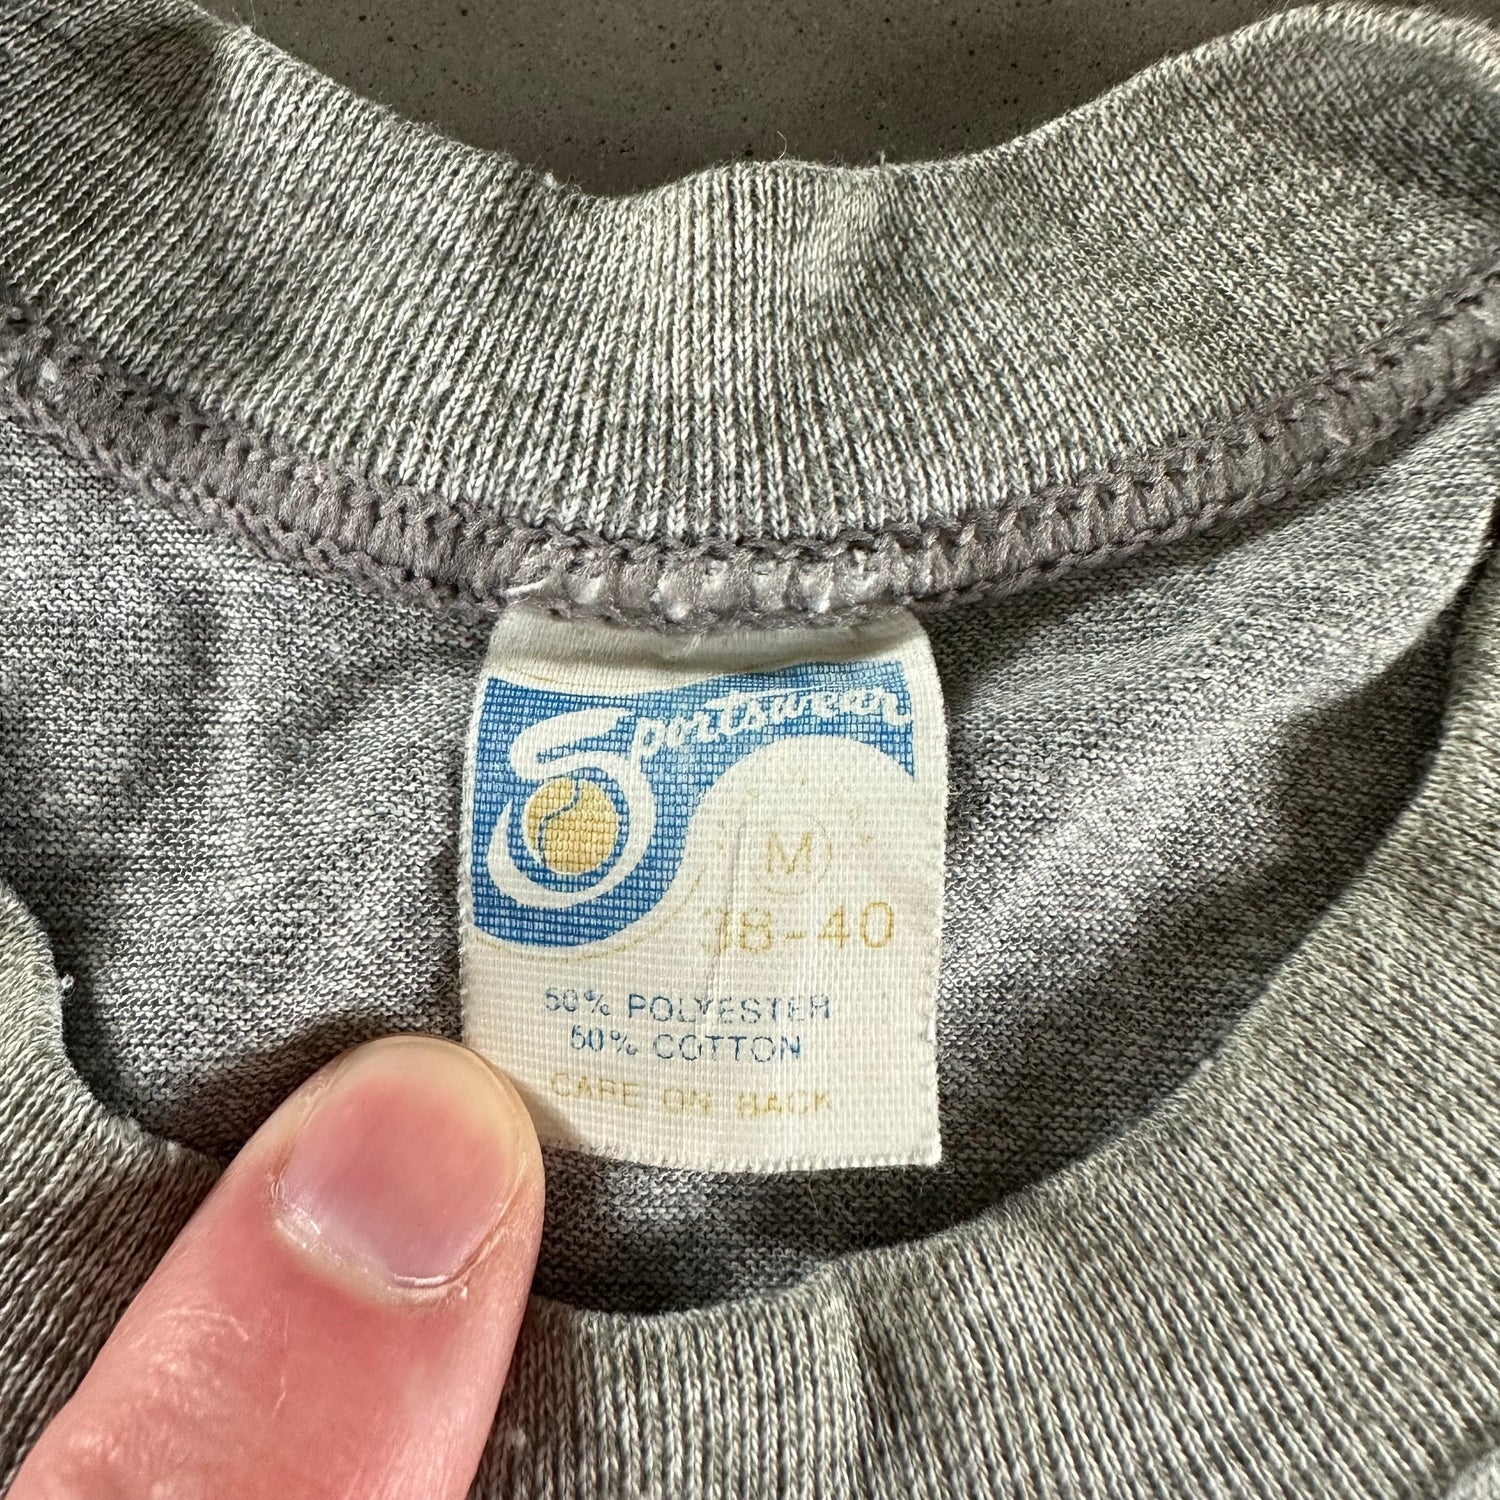 Vintage 1980s New Jersey Nets T-shirt size Medium